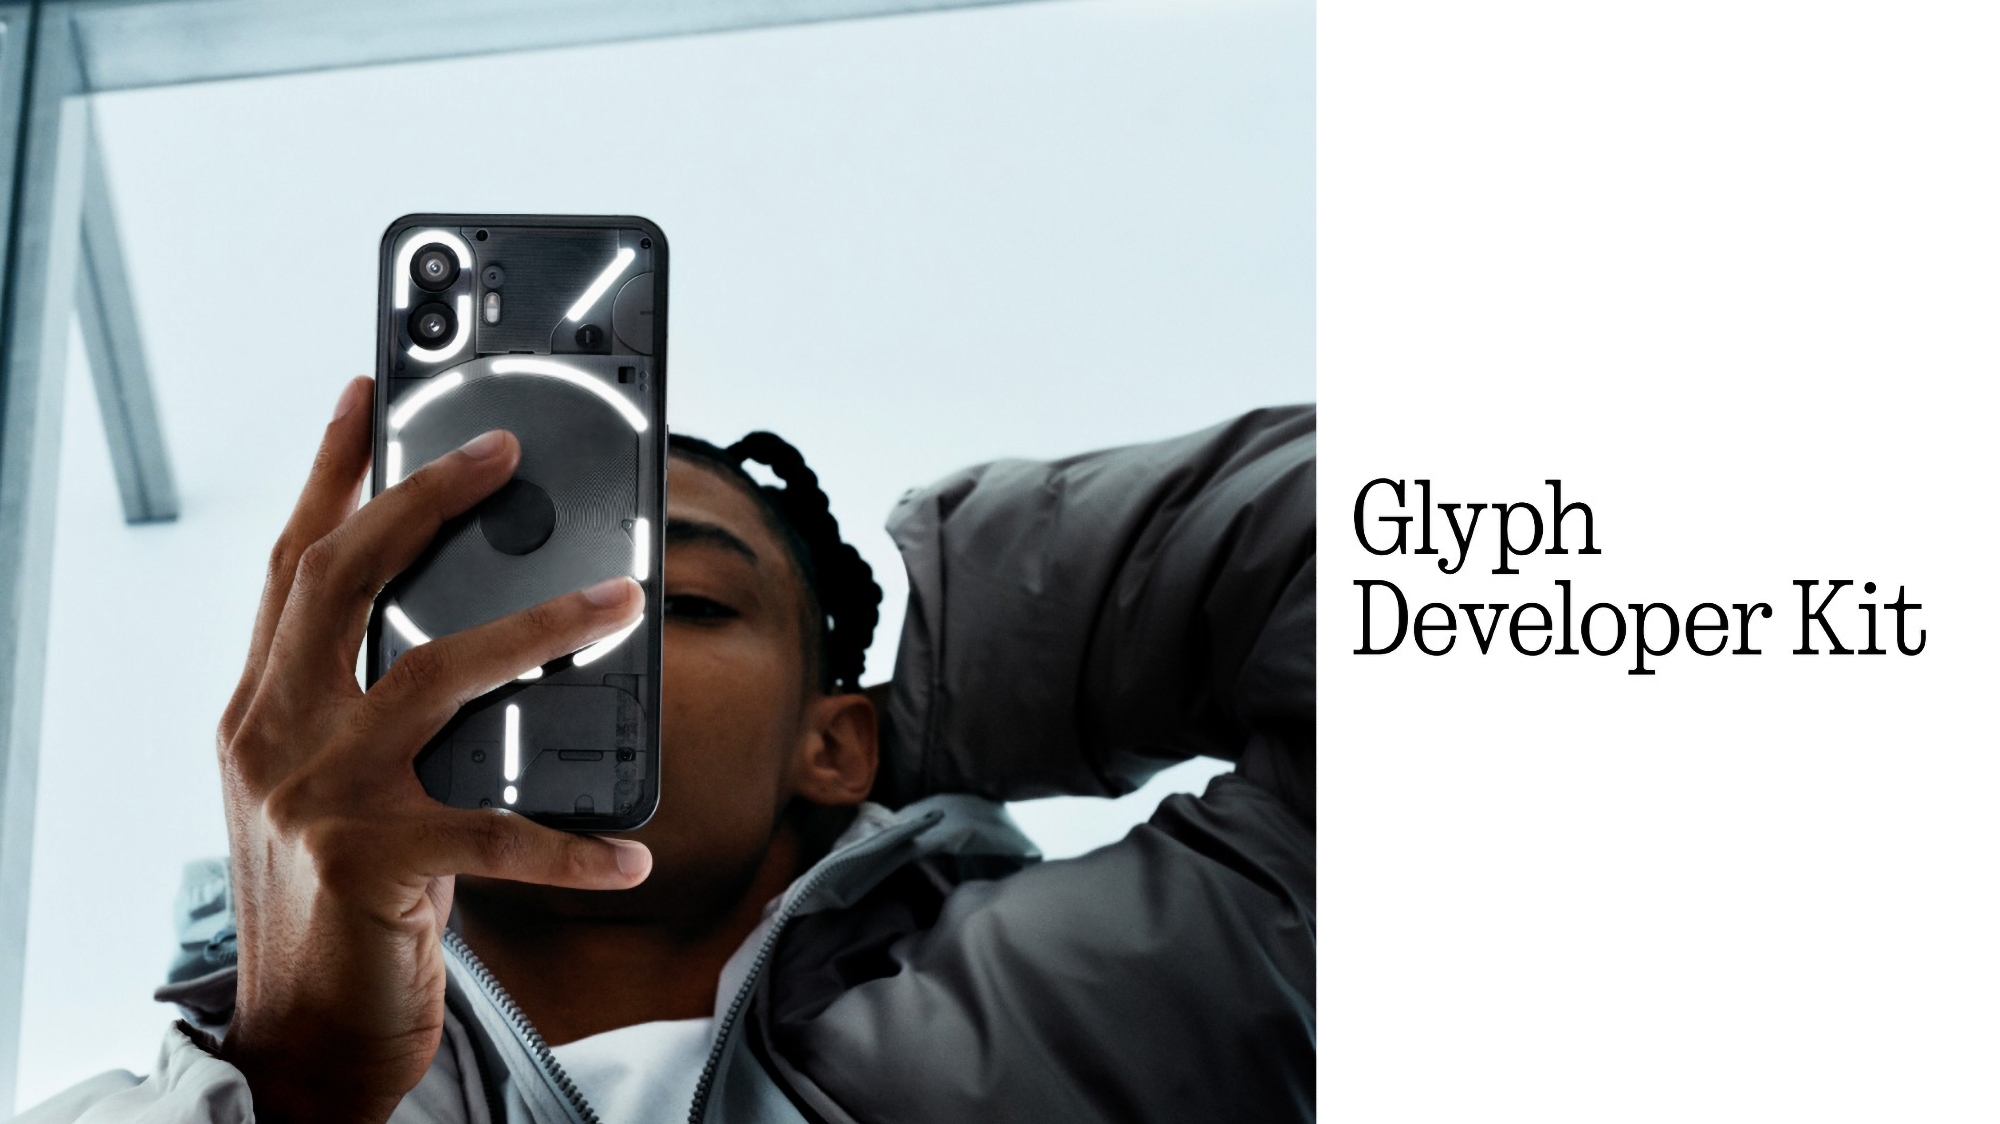 Nothing has announced the Glyph Developer Kit for app developers